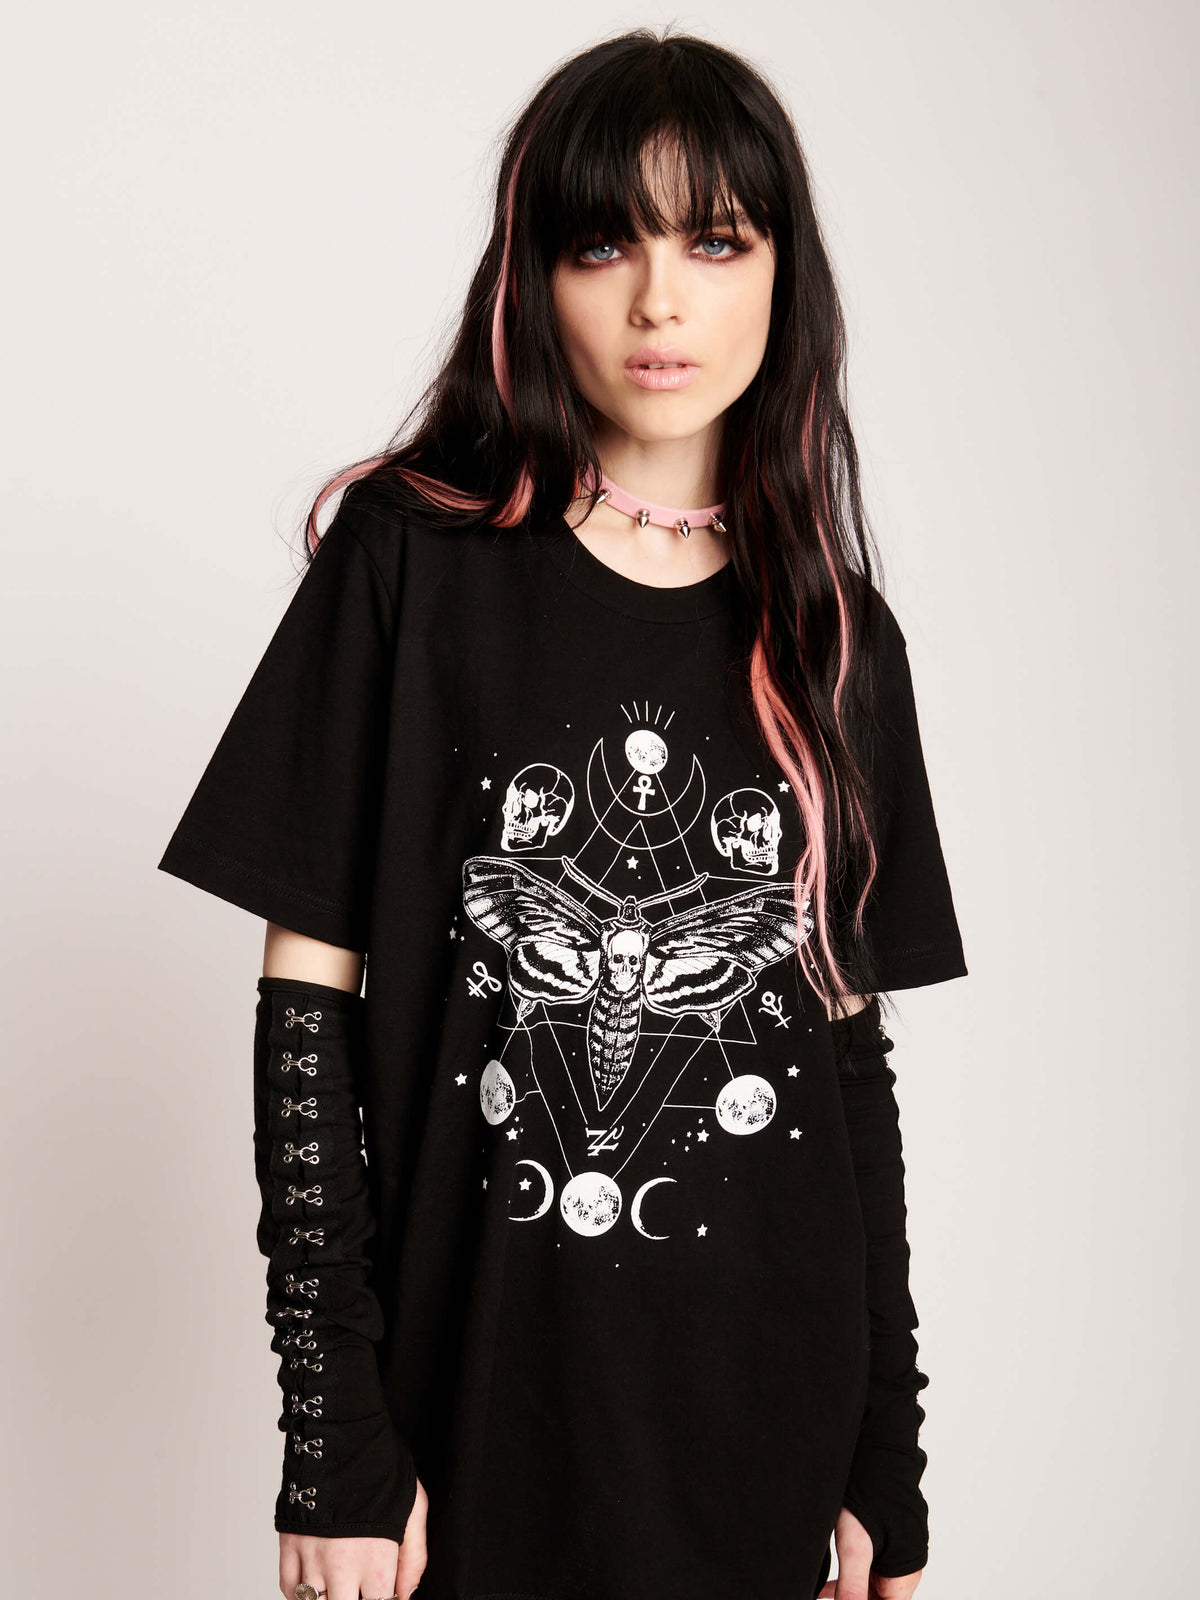 Deathmoth art on unisex black t-shirt